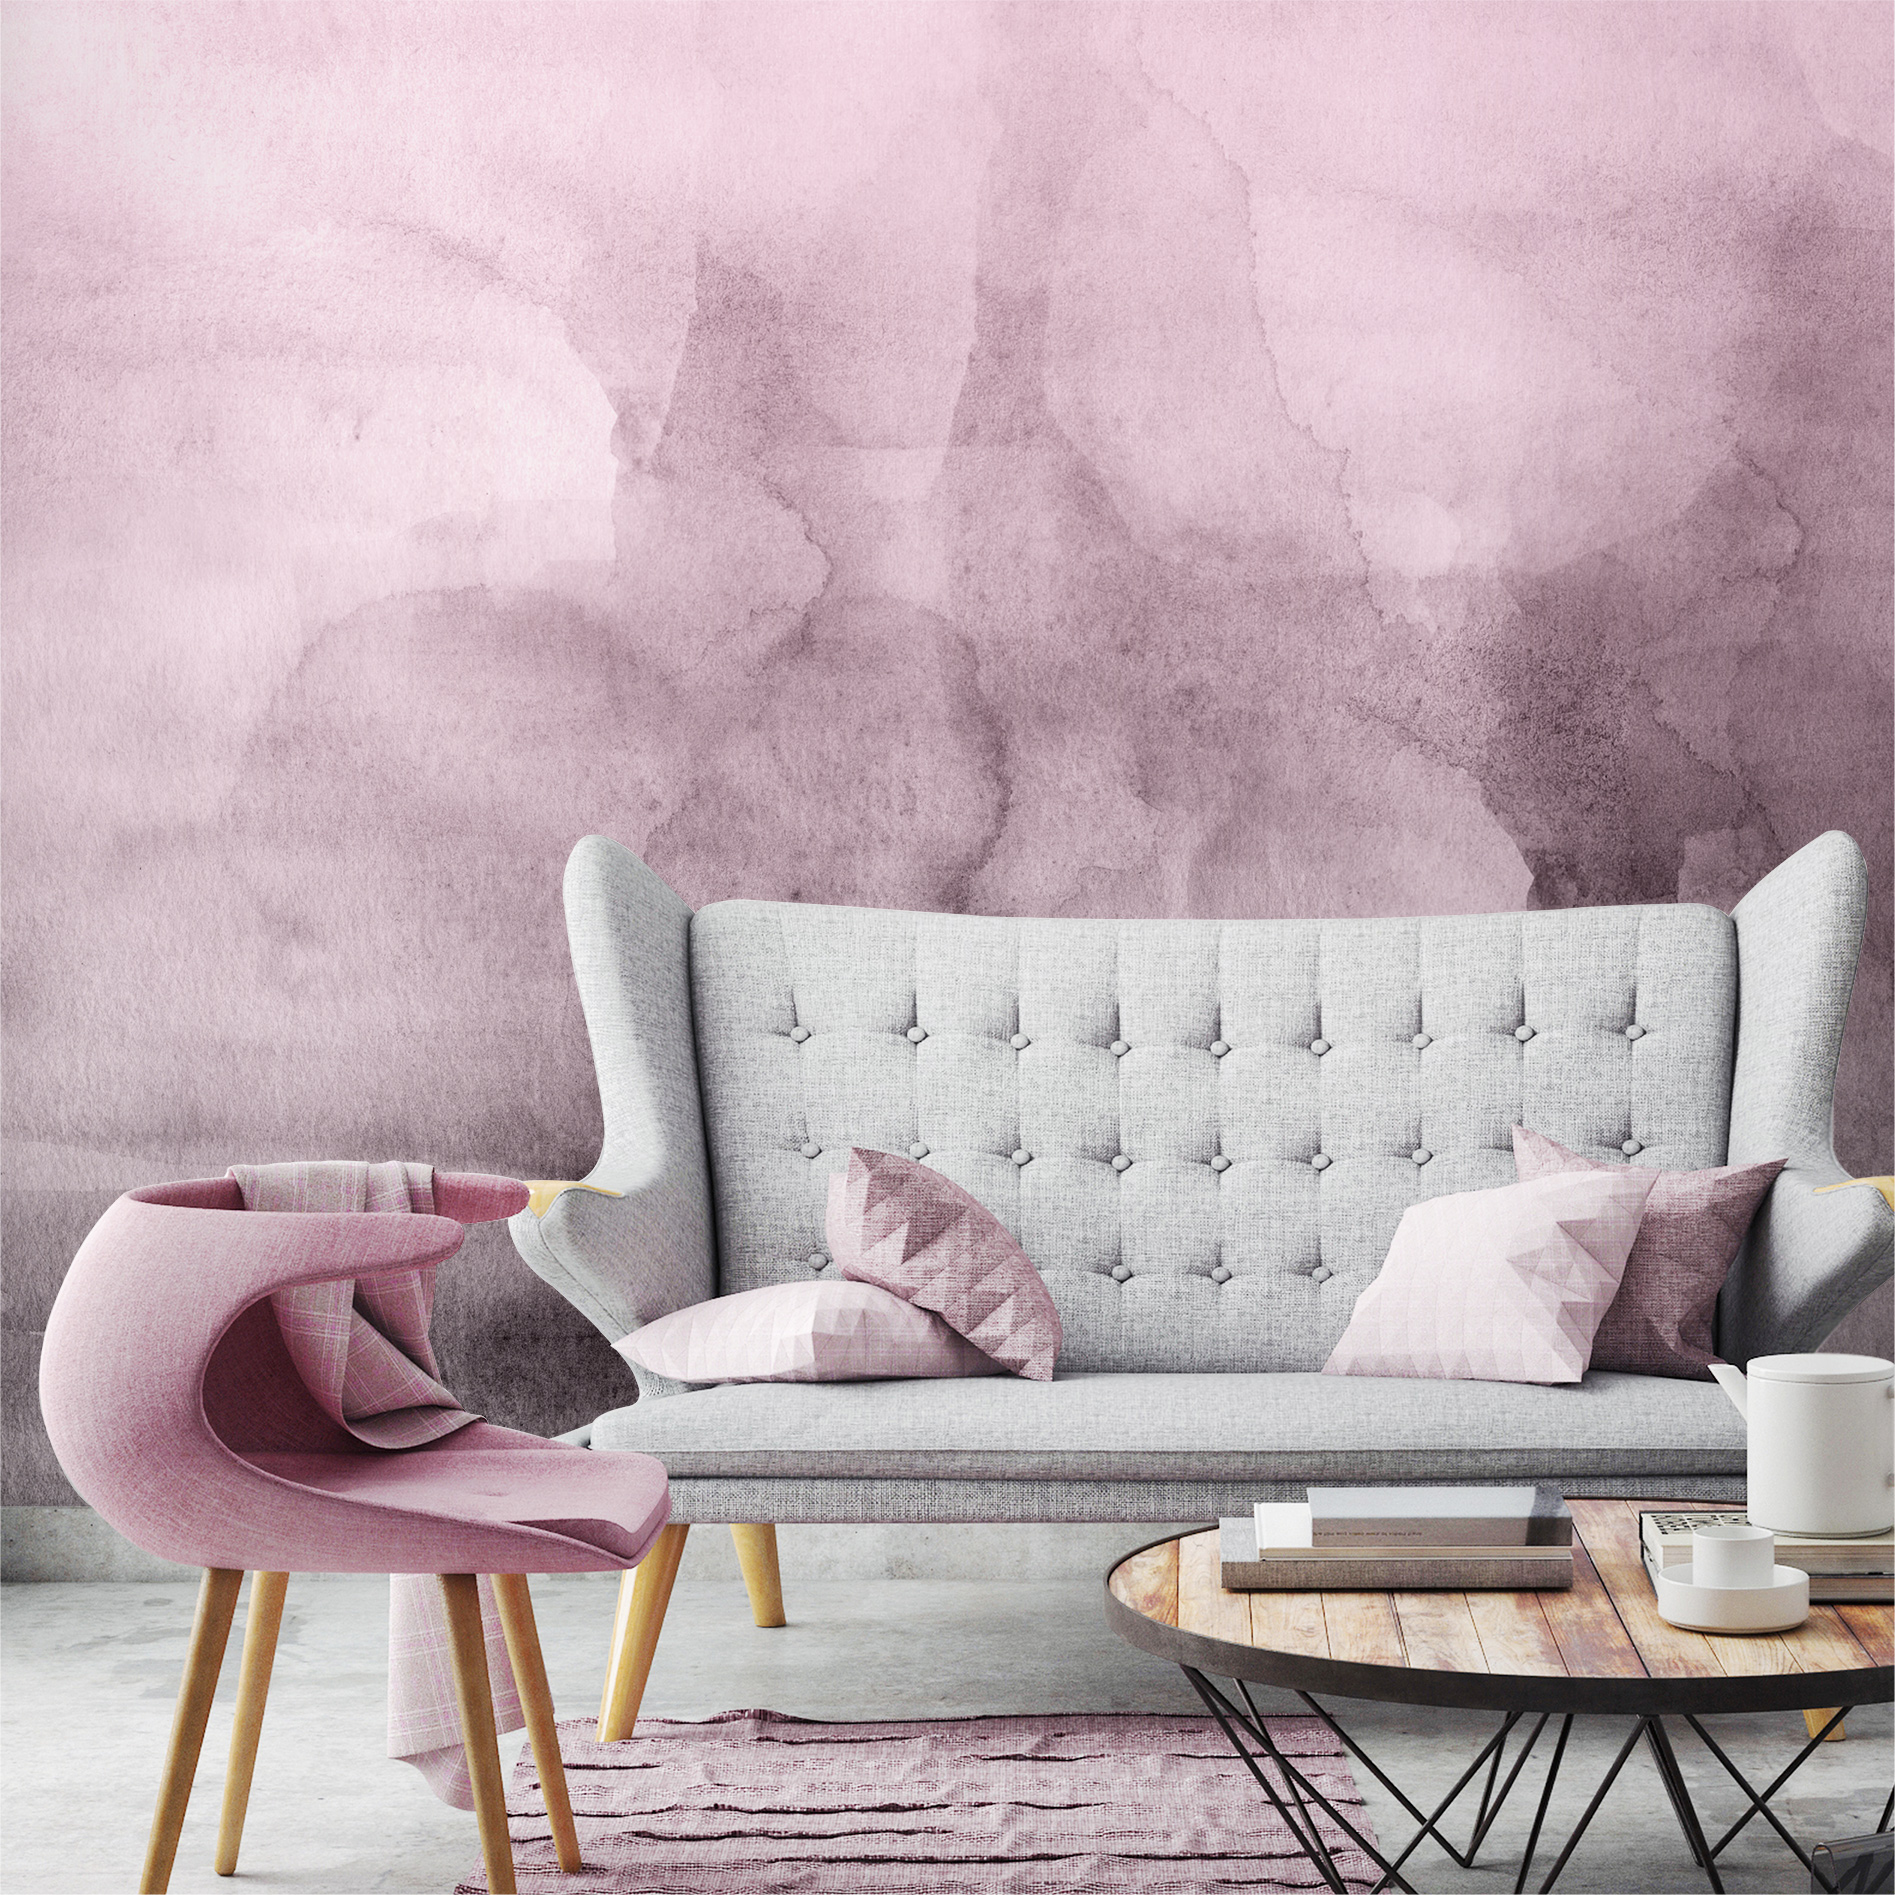 the wall wallpaper,furniture,purple,wall,pink,room